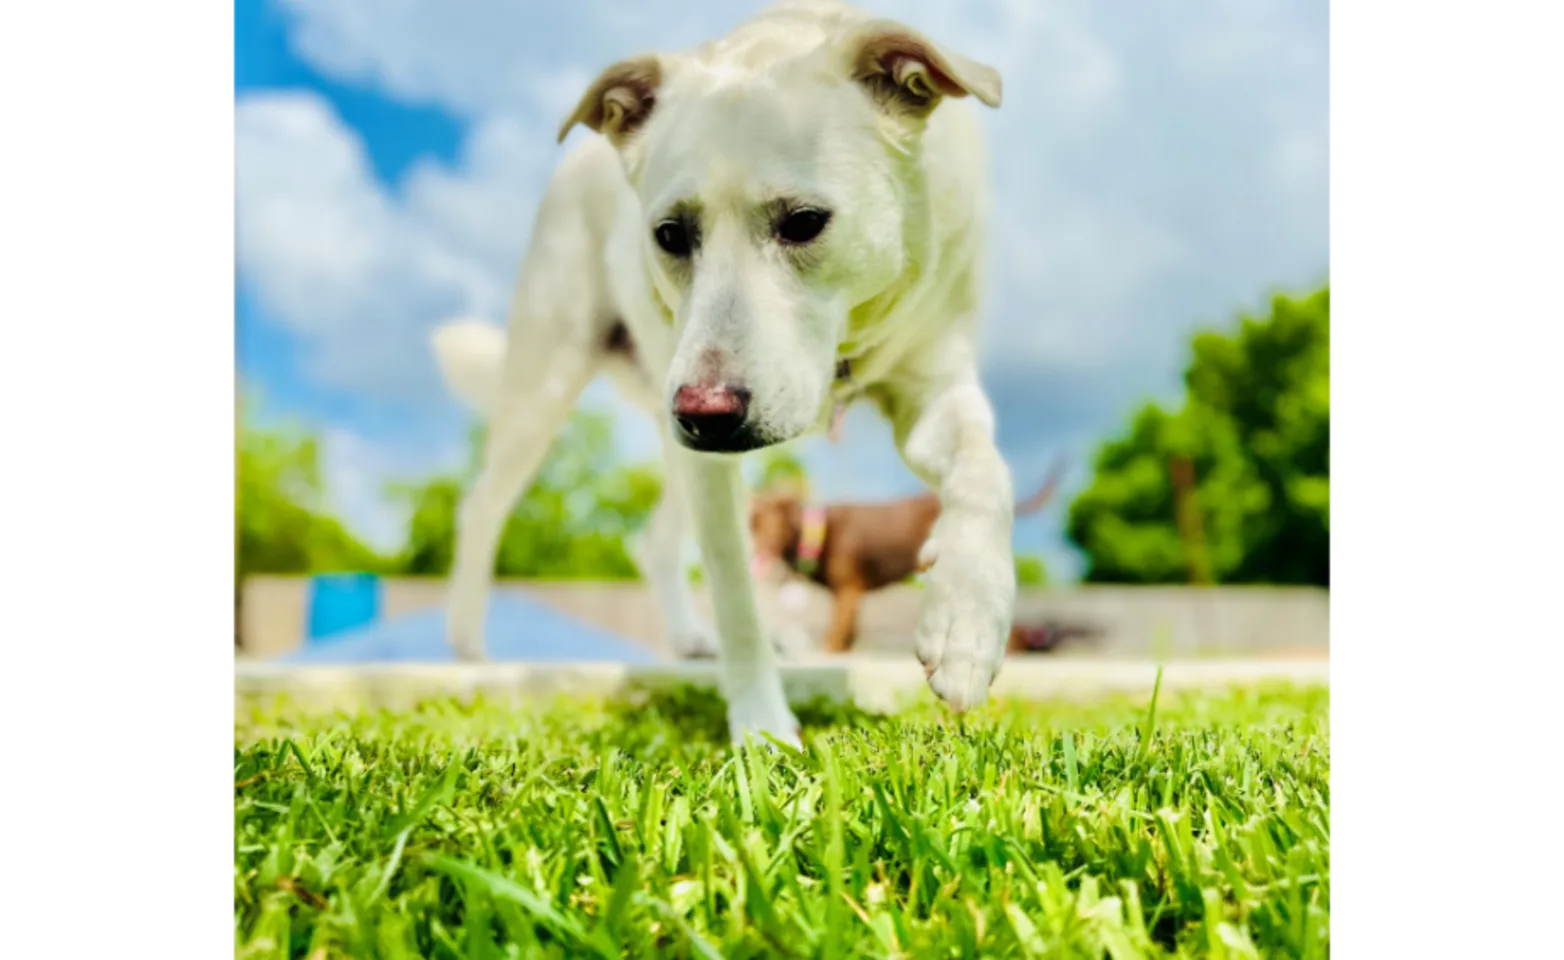 Dog Walking on Grass